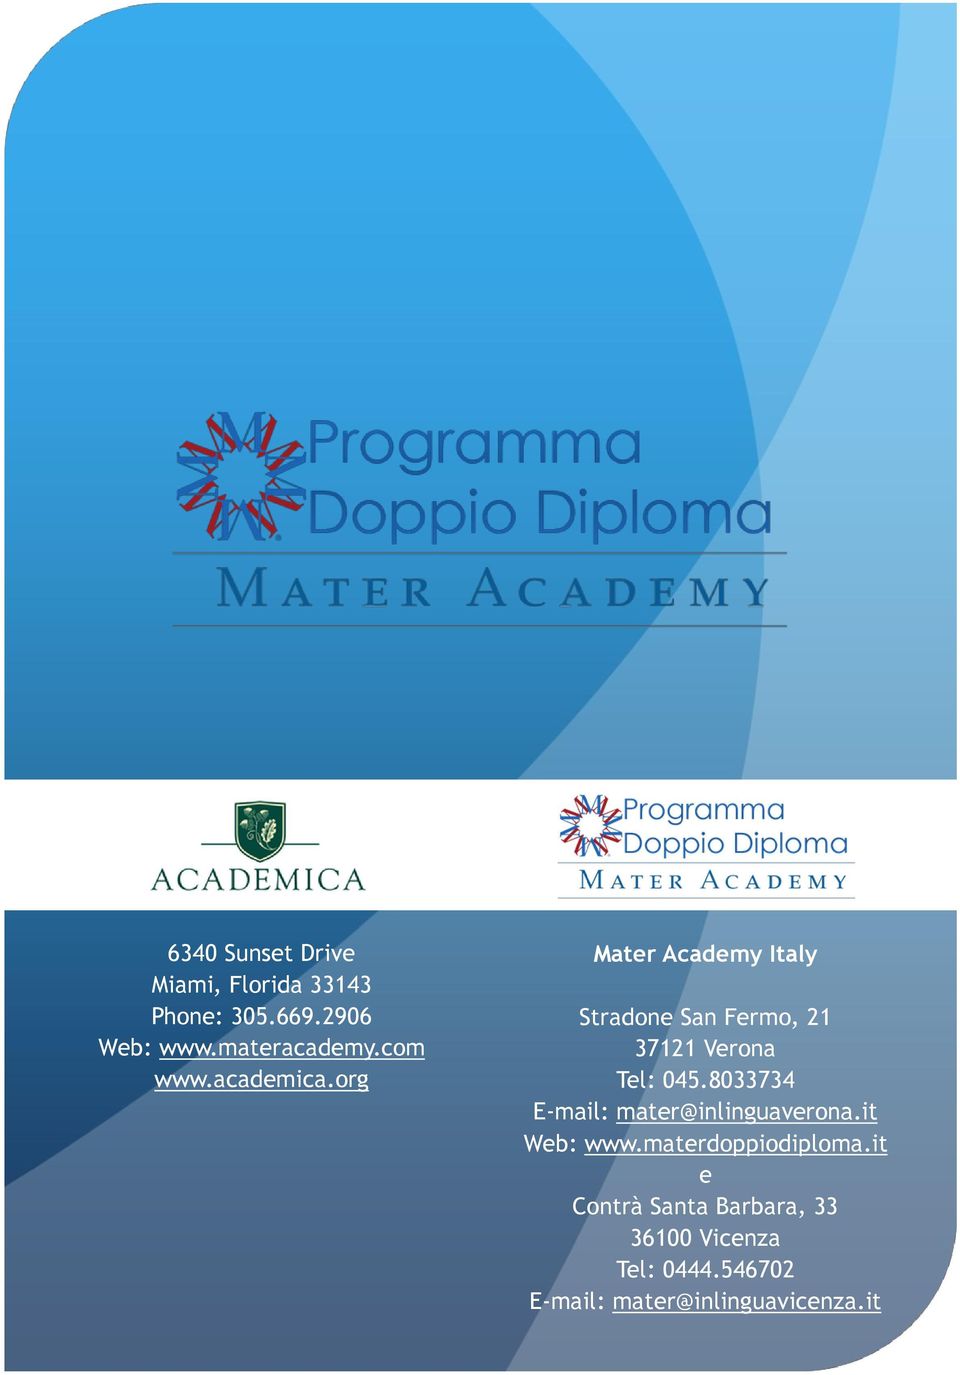 org Mater Academy Italy Stradone San Fermo, 21 37121 Verona Tel: 045.